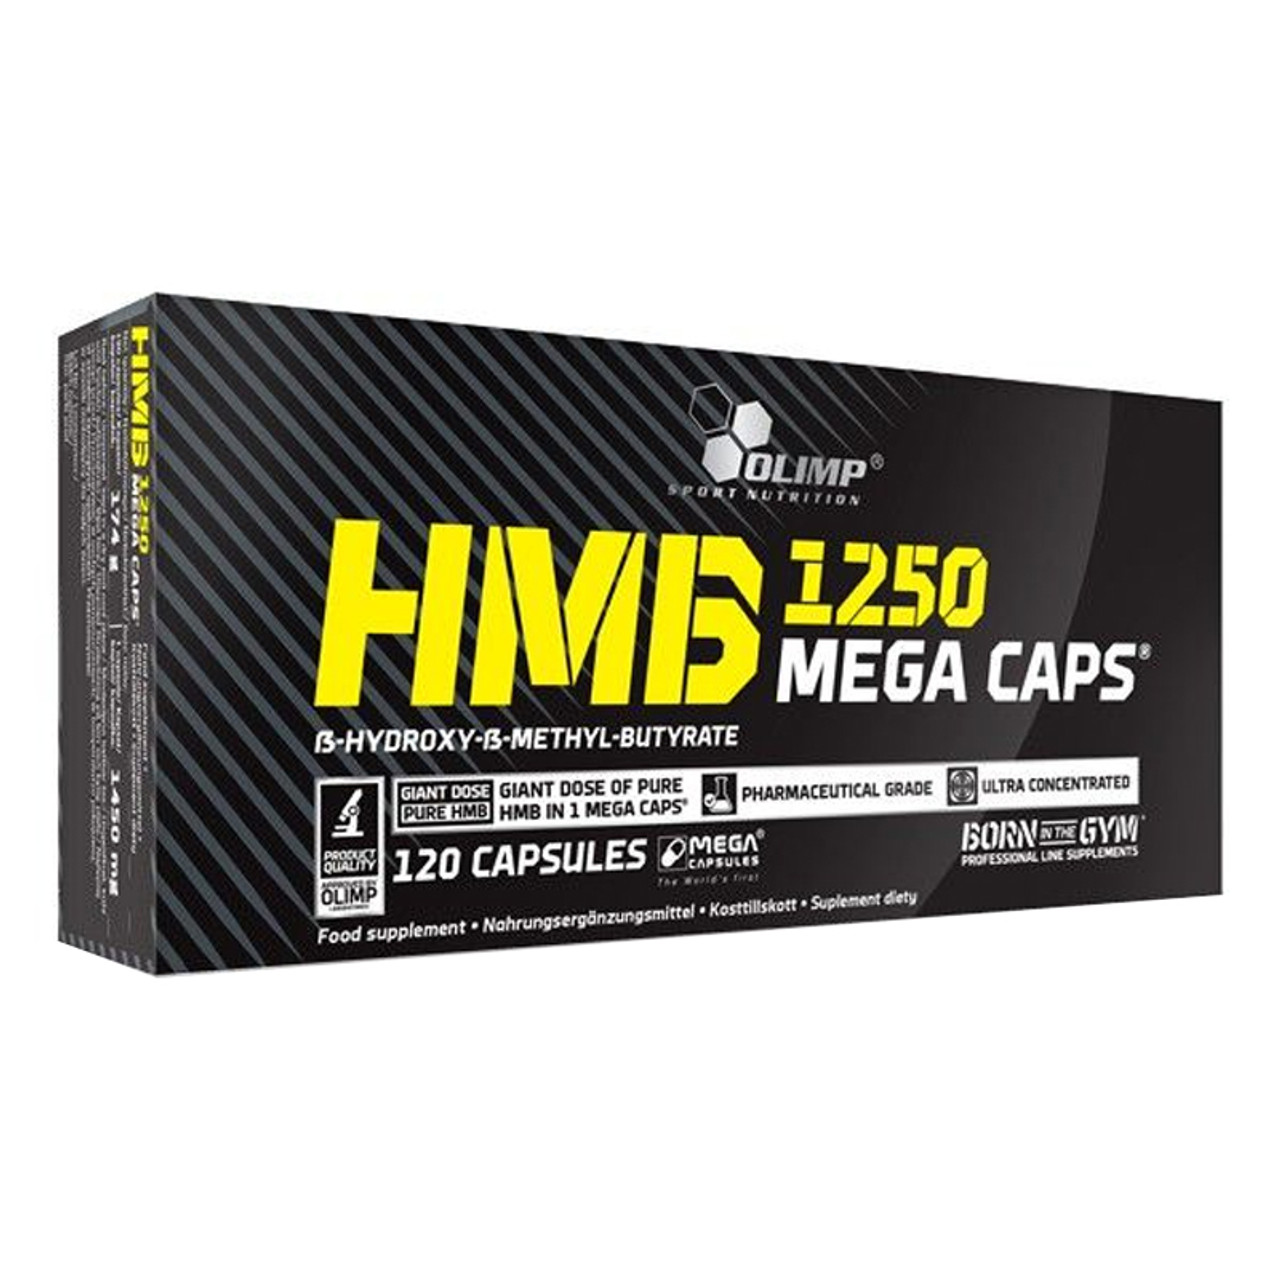 Olimp - HMB MEGA CAPS - 120 CAPSULES